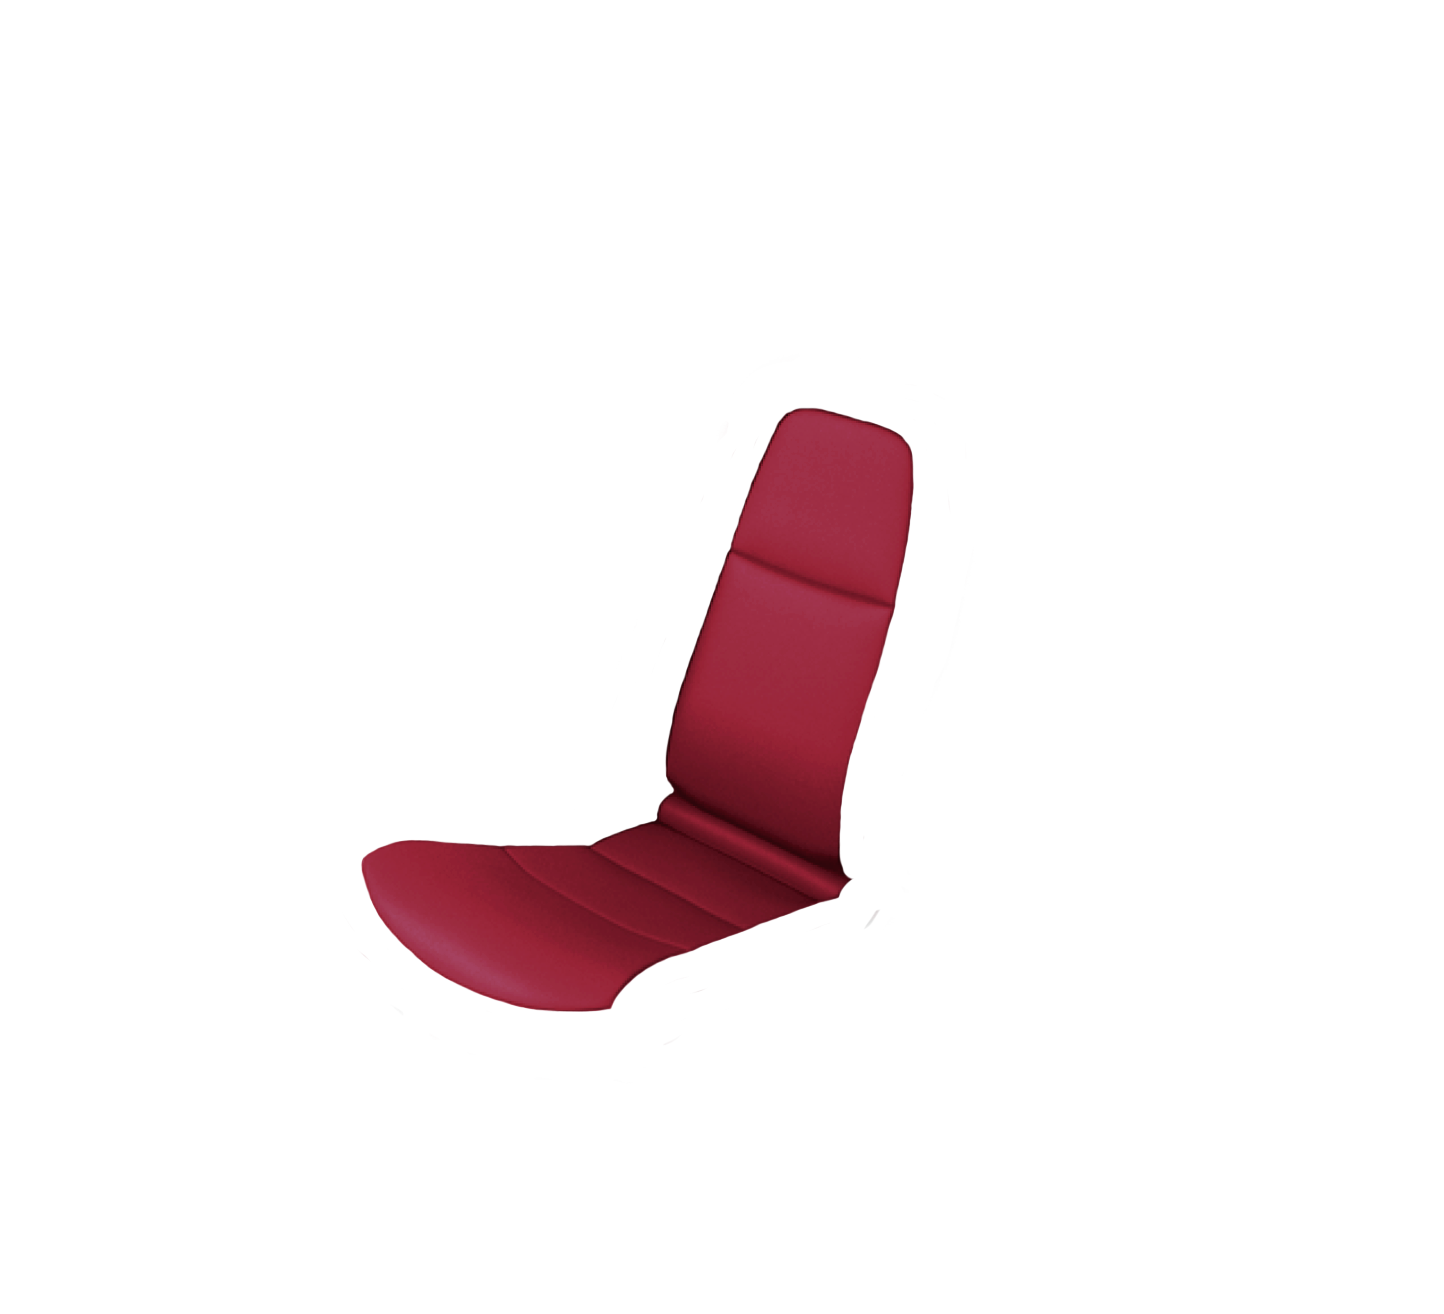 Custom Seats By You